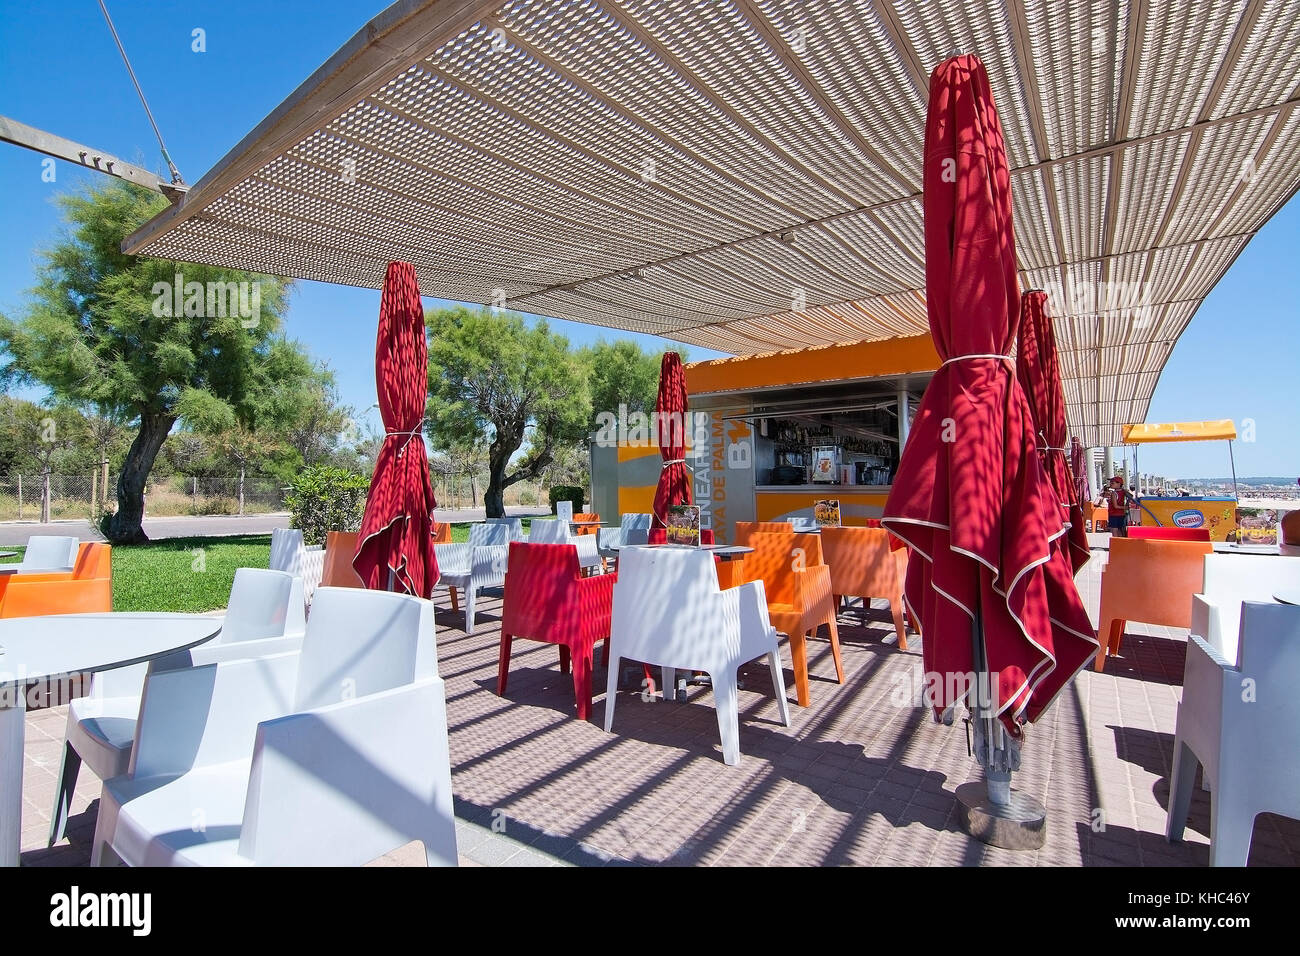 Palma de Mallorca, Balearen, Spanien - 25. Mai 2017: Sitze in einem Der balneario Cafes an der Playa de Palma Beach Mai 25, 2017 in Palma de mallor Stockfoto